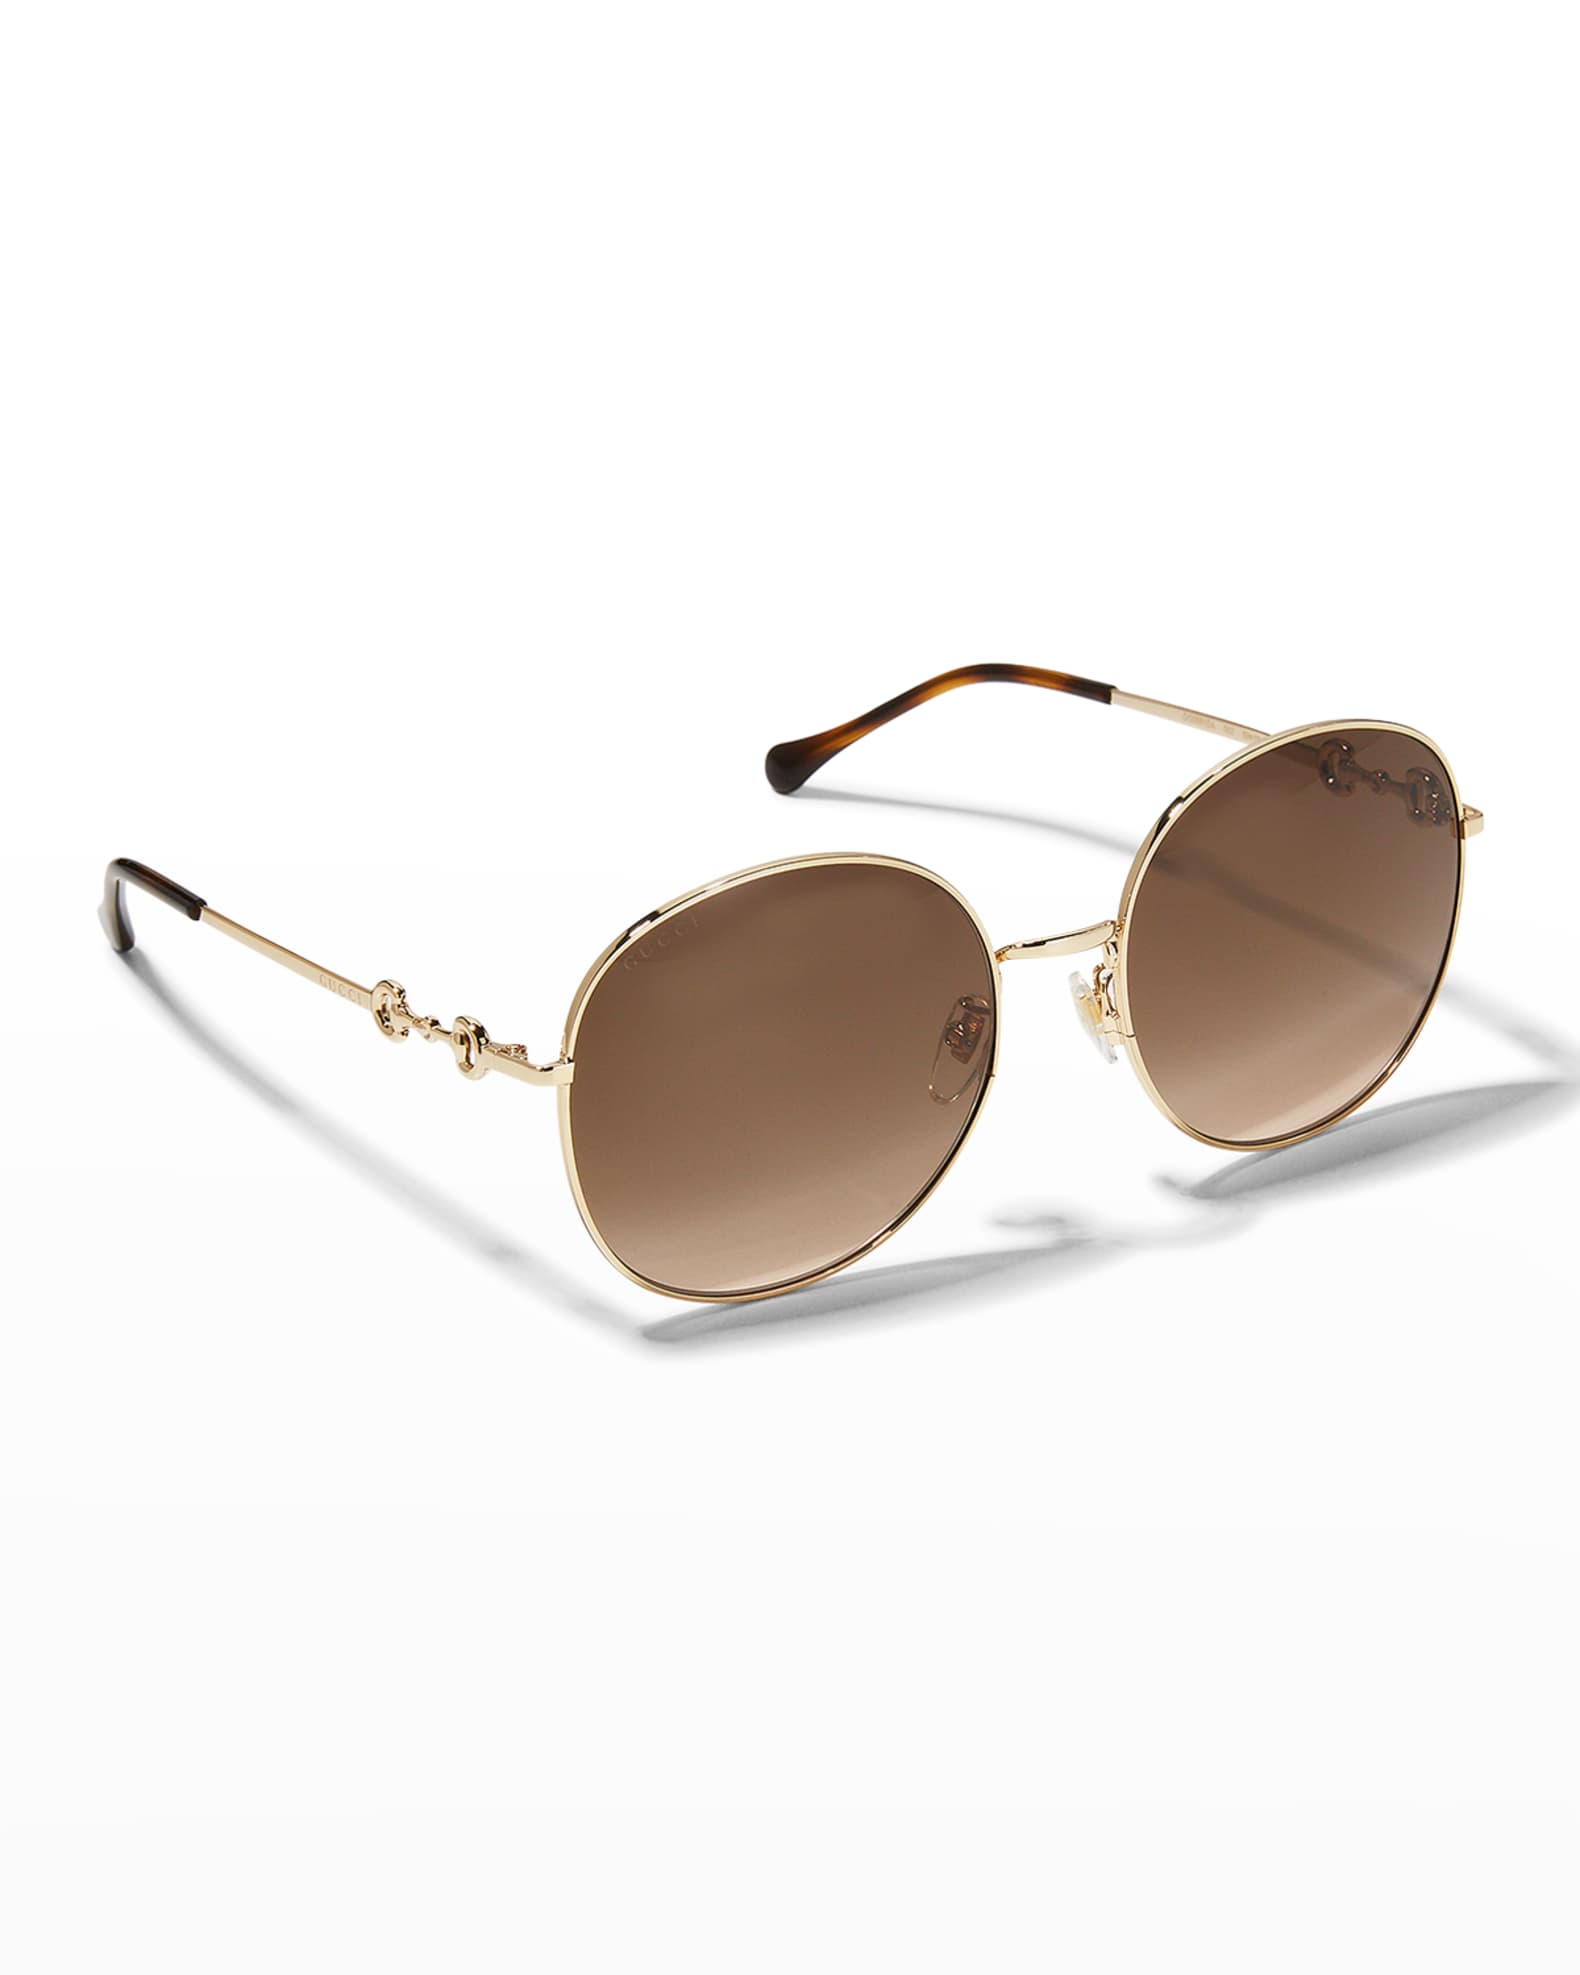 Gucci Iconic Horsebit Round Metal Sunglasses | Neiman Marcus